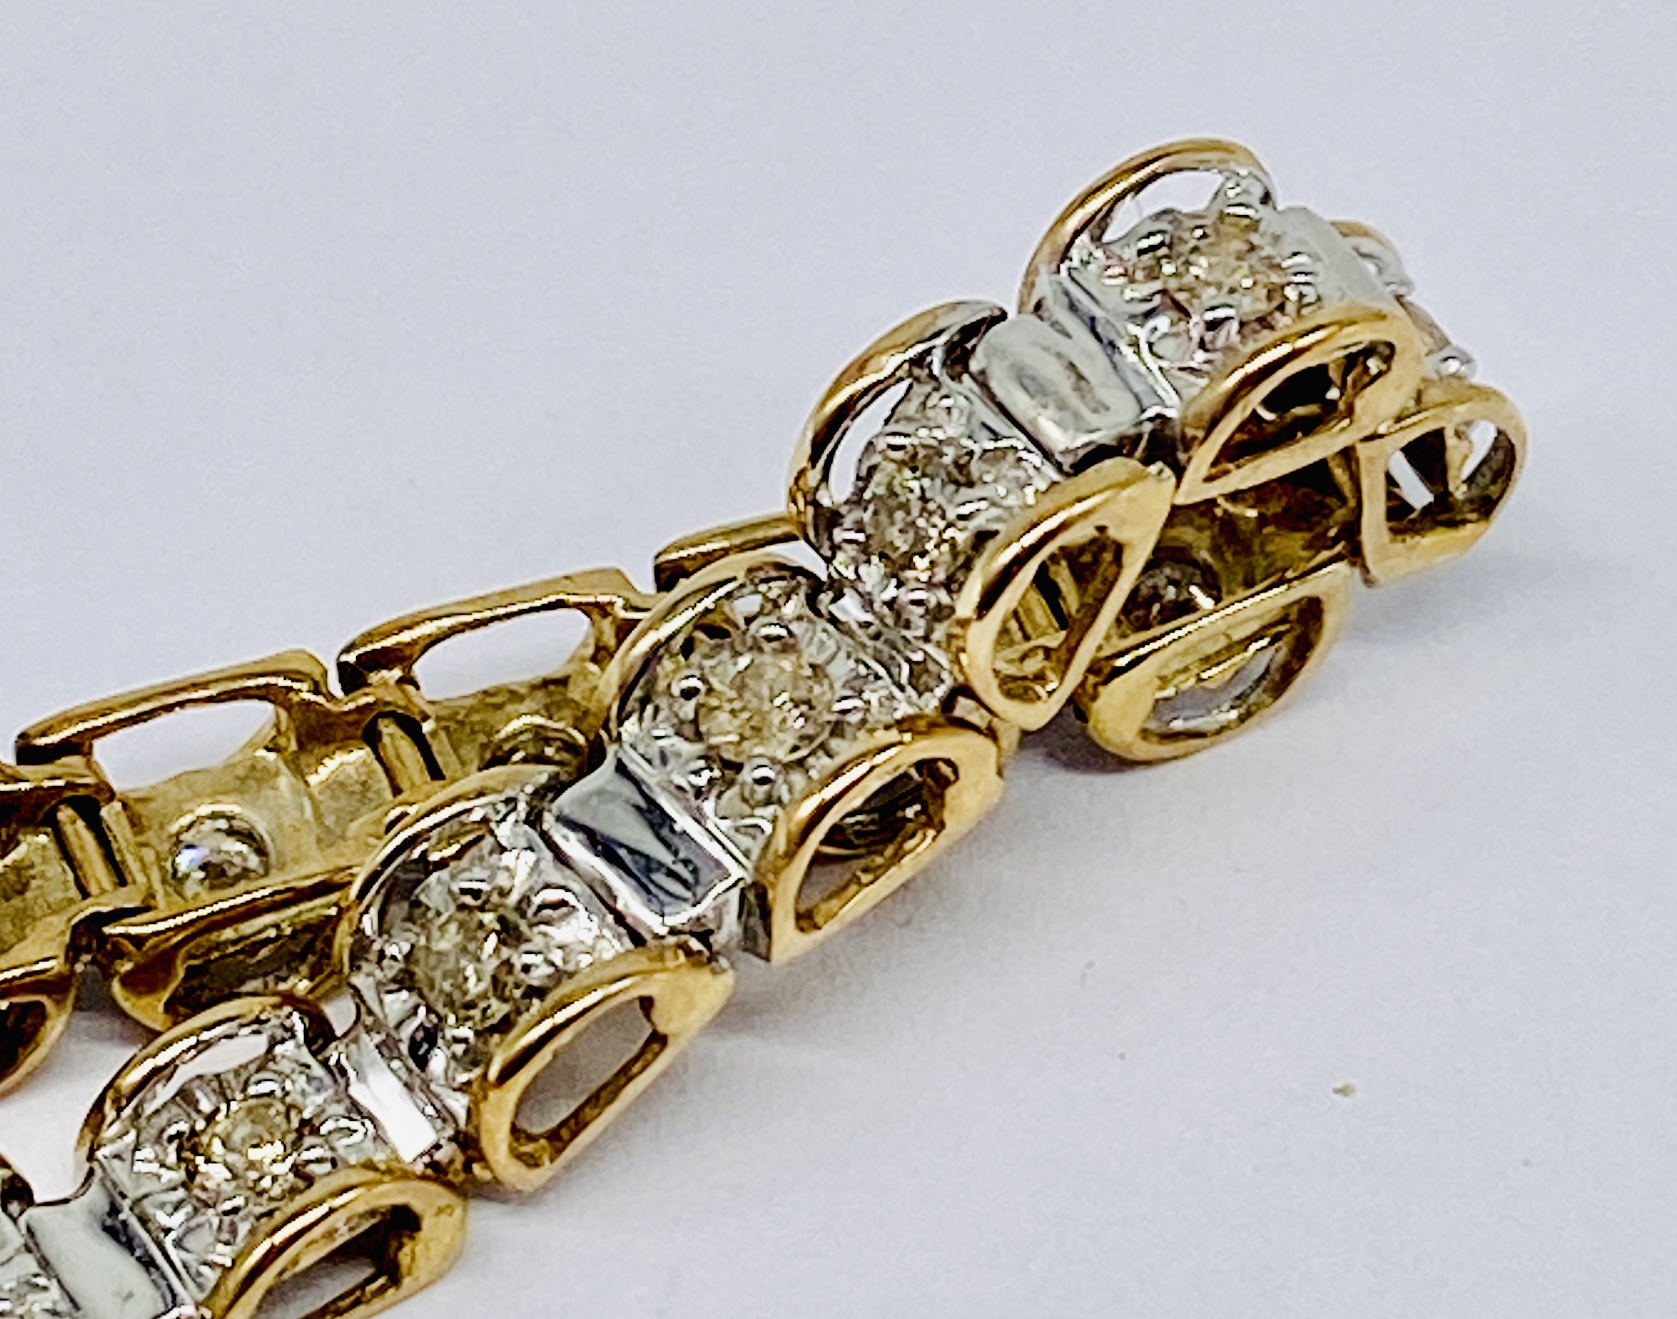 A 9ct gold tennis bracelet set with diamonds - Image 2 of 2